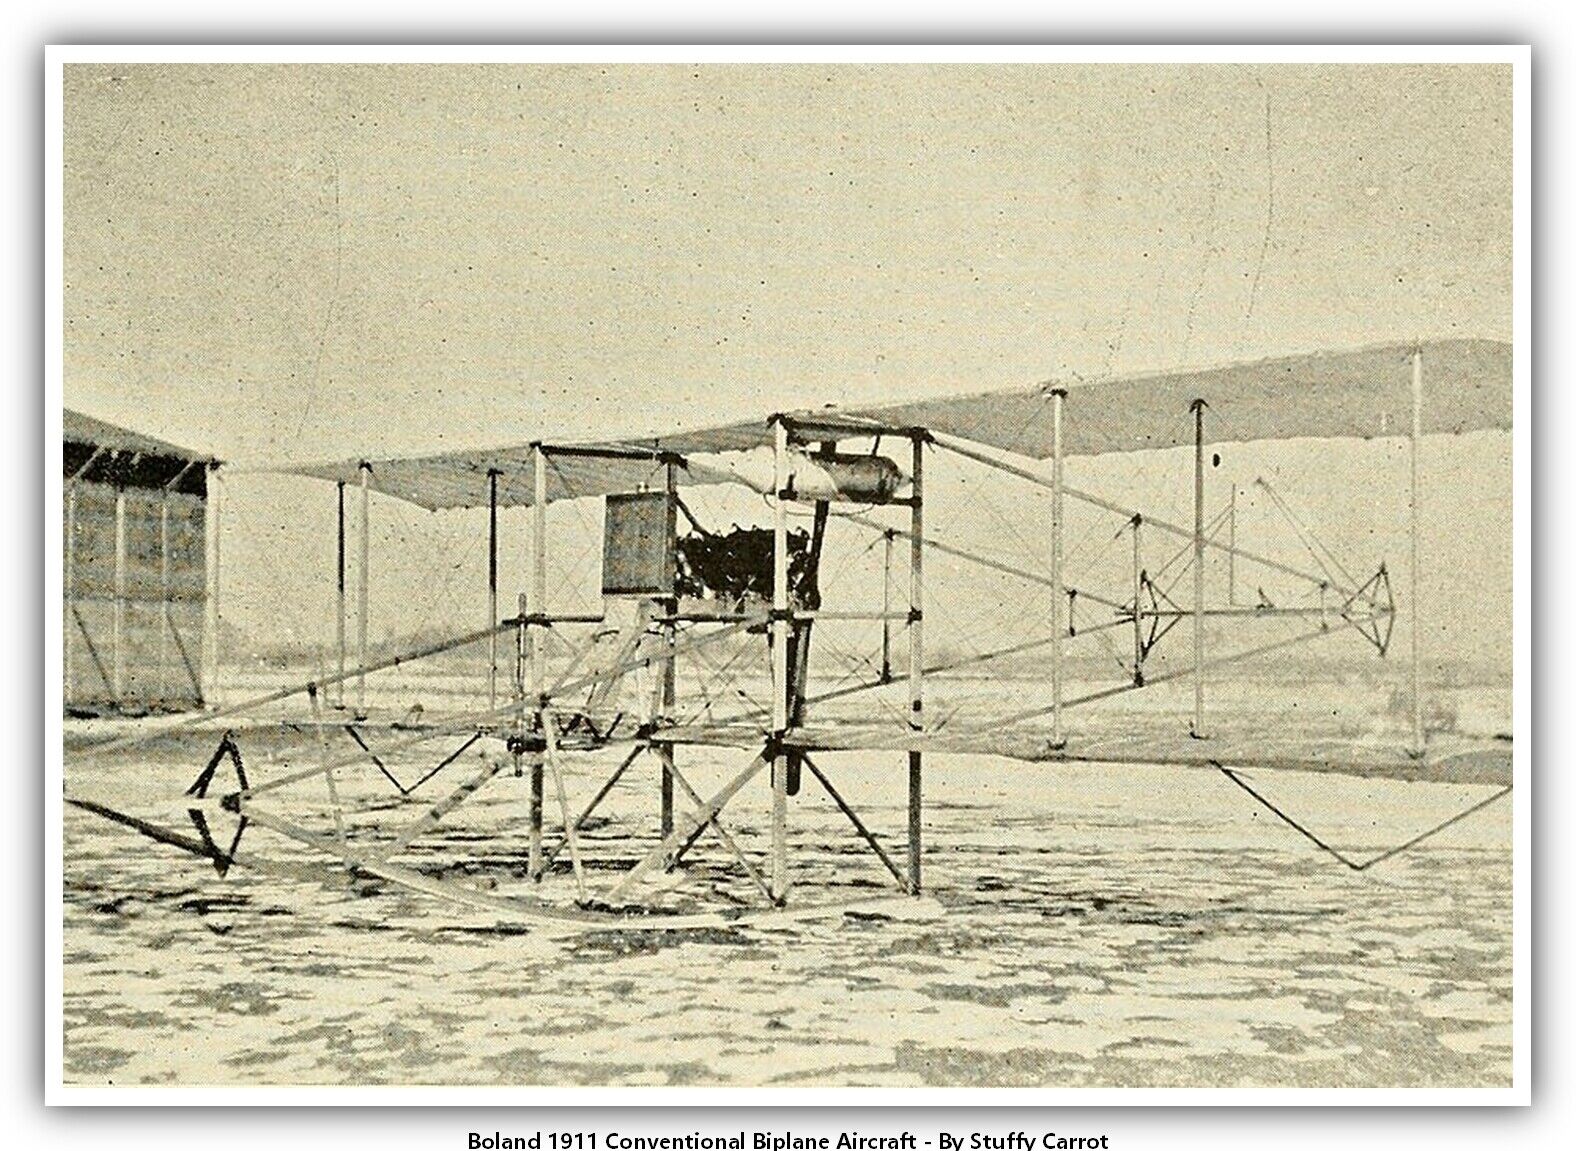 Boland 1911 Conventional Biplane Aircraft